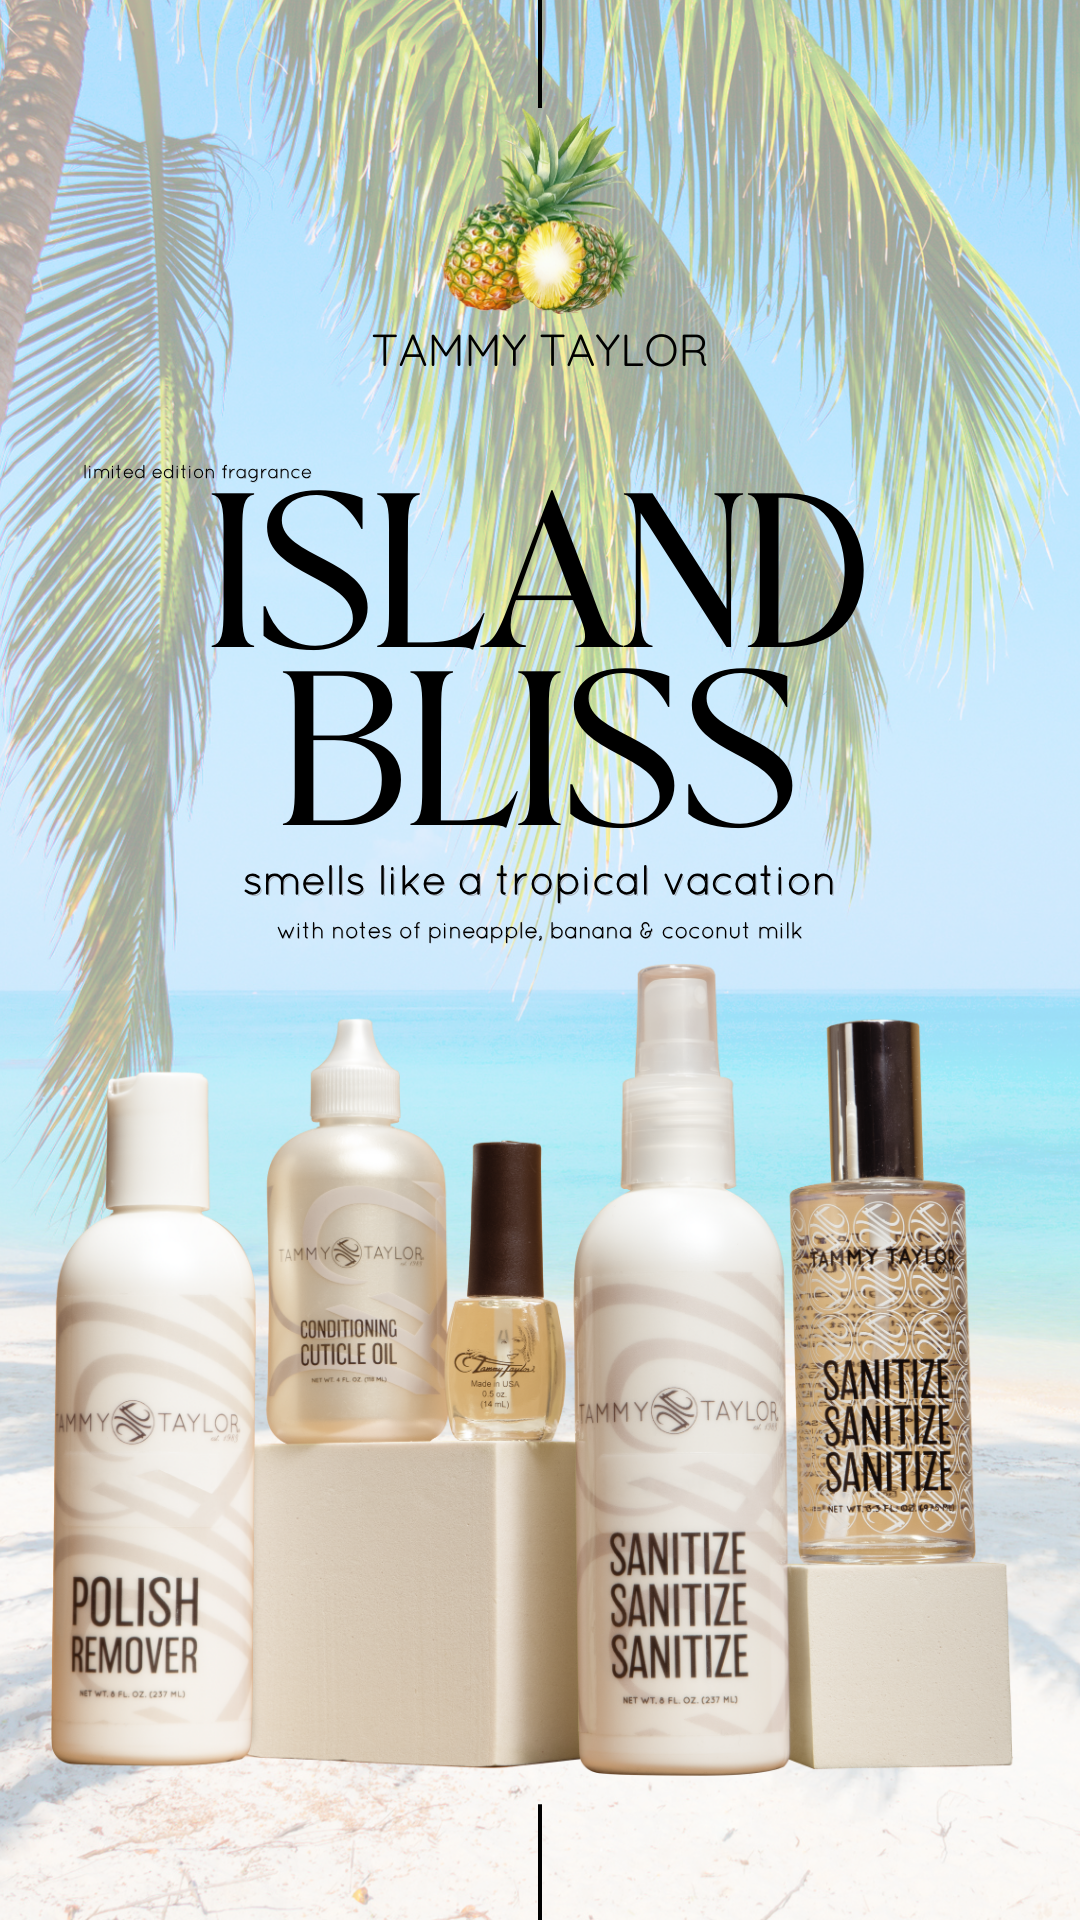 Island Bliss Sanitize